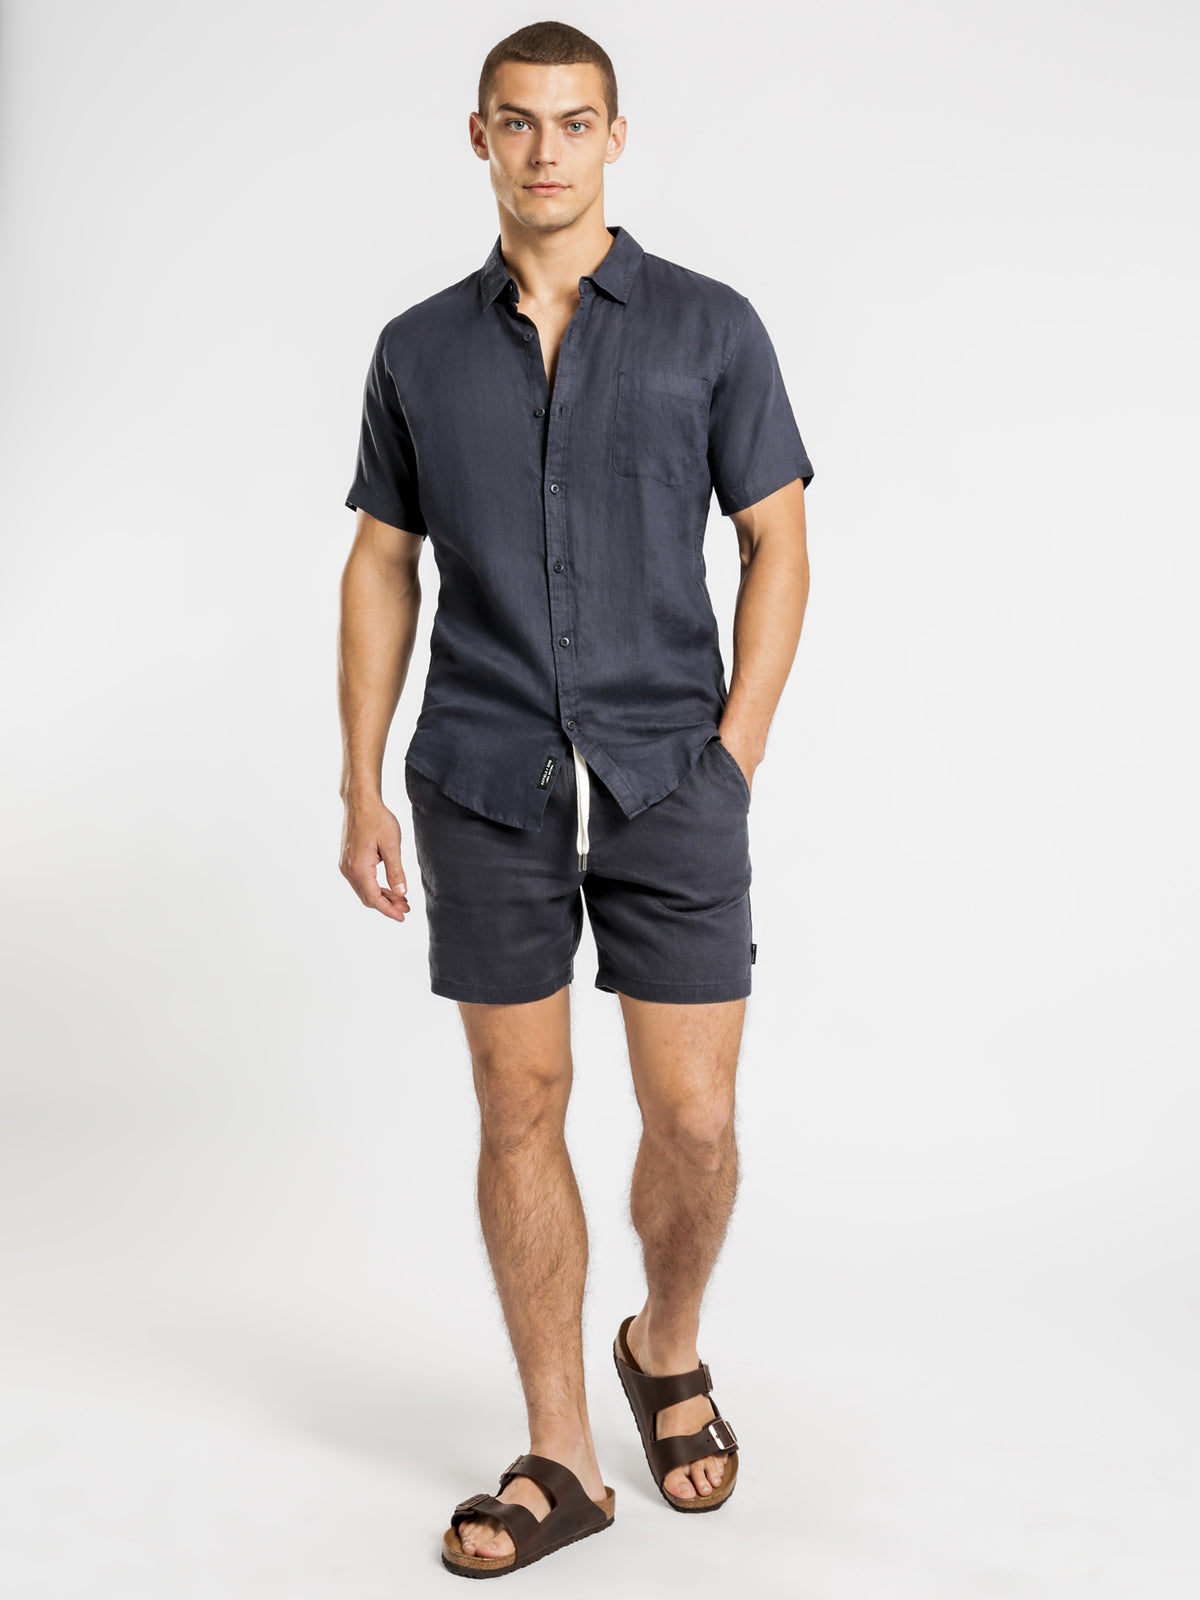 Nelson Linen Short Sleeve Shirt in Navy Blue